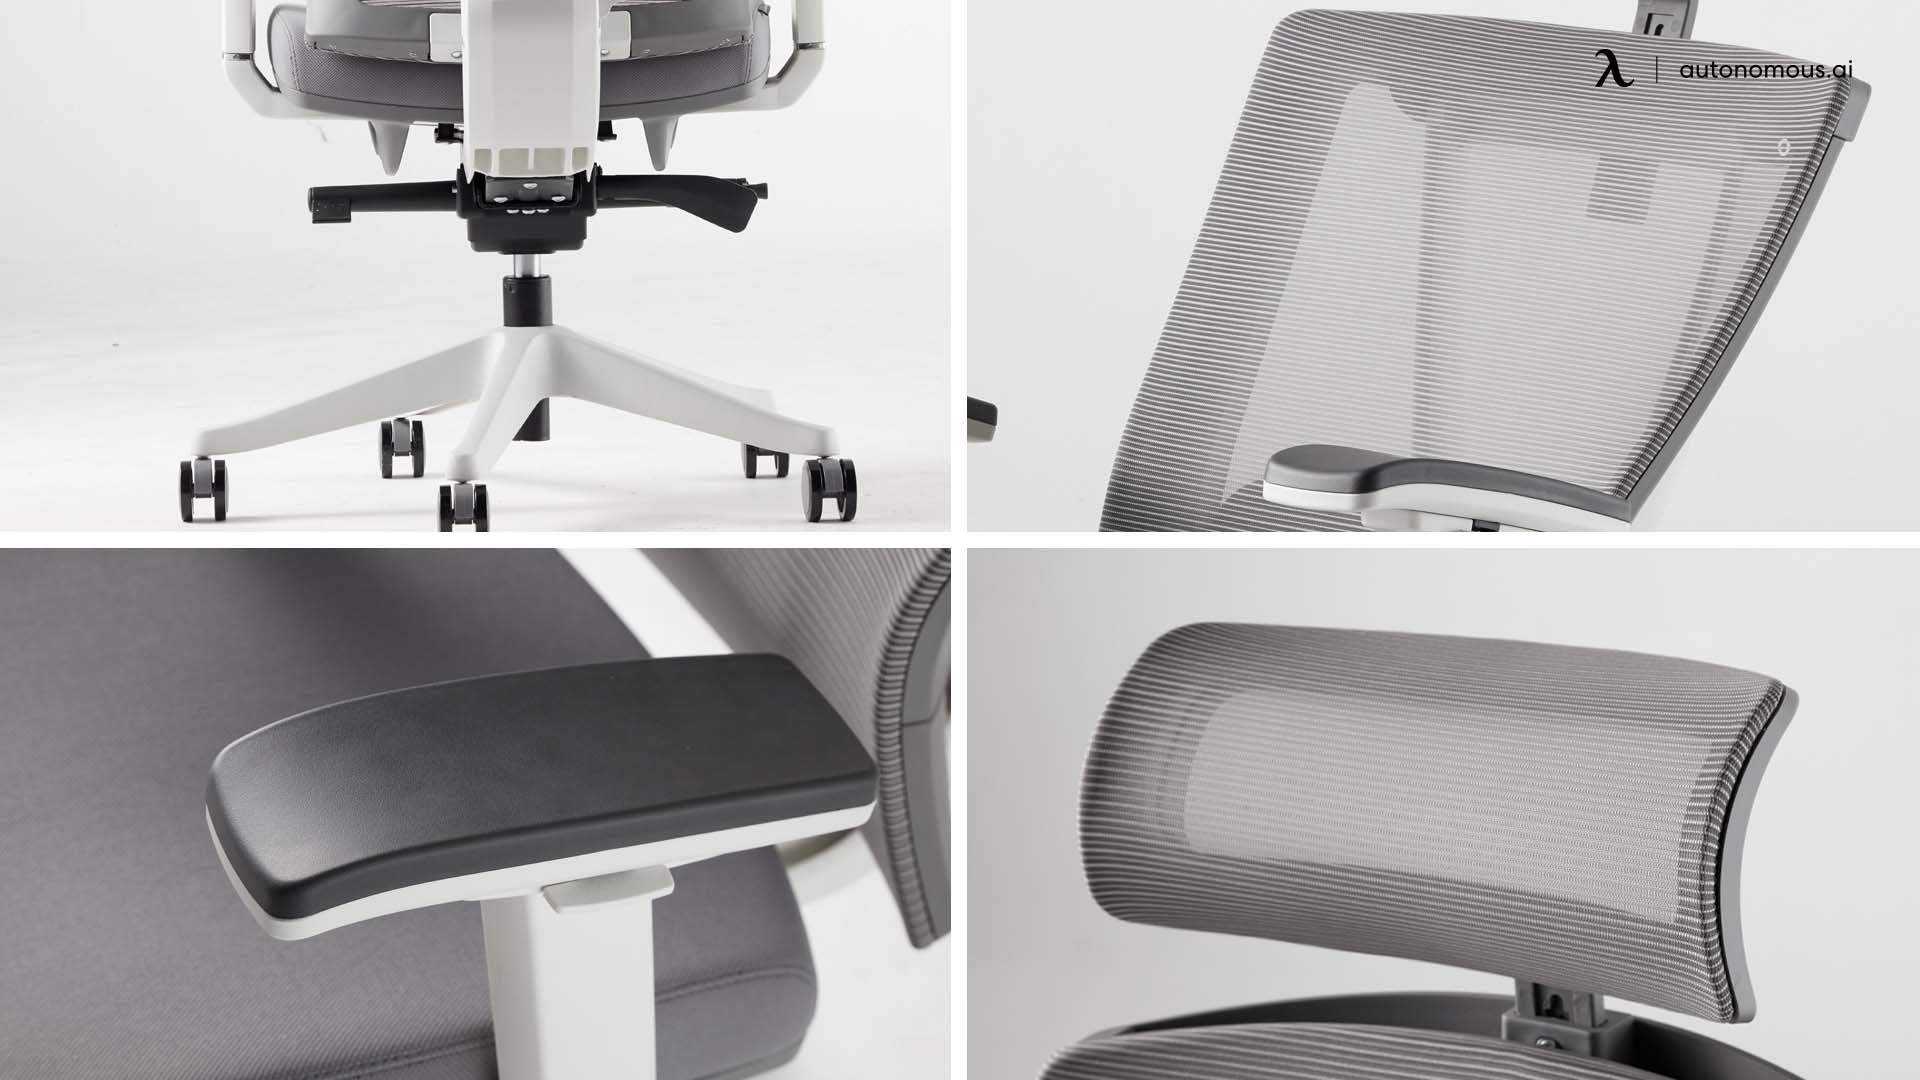 Ergonomic chair components